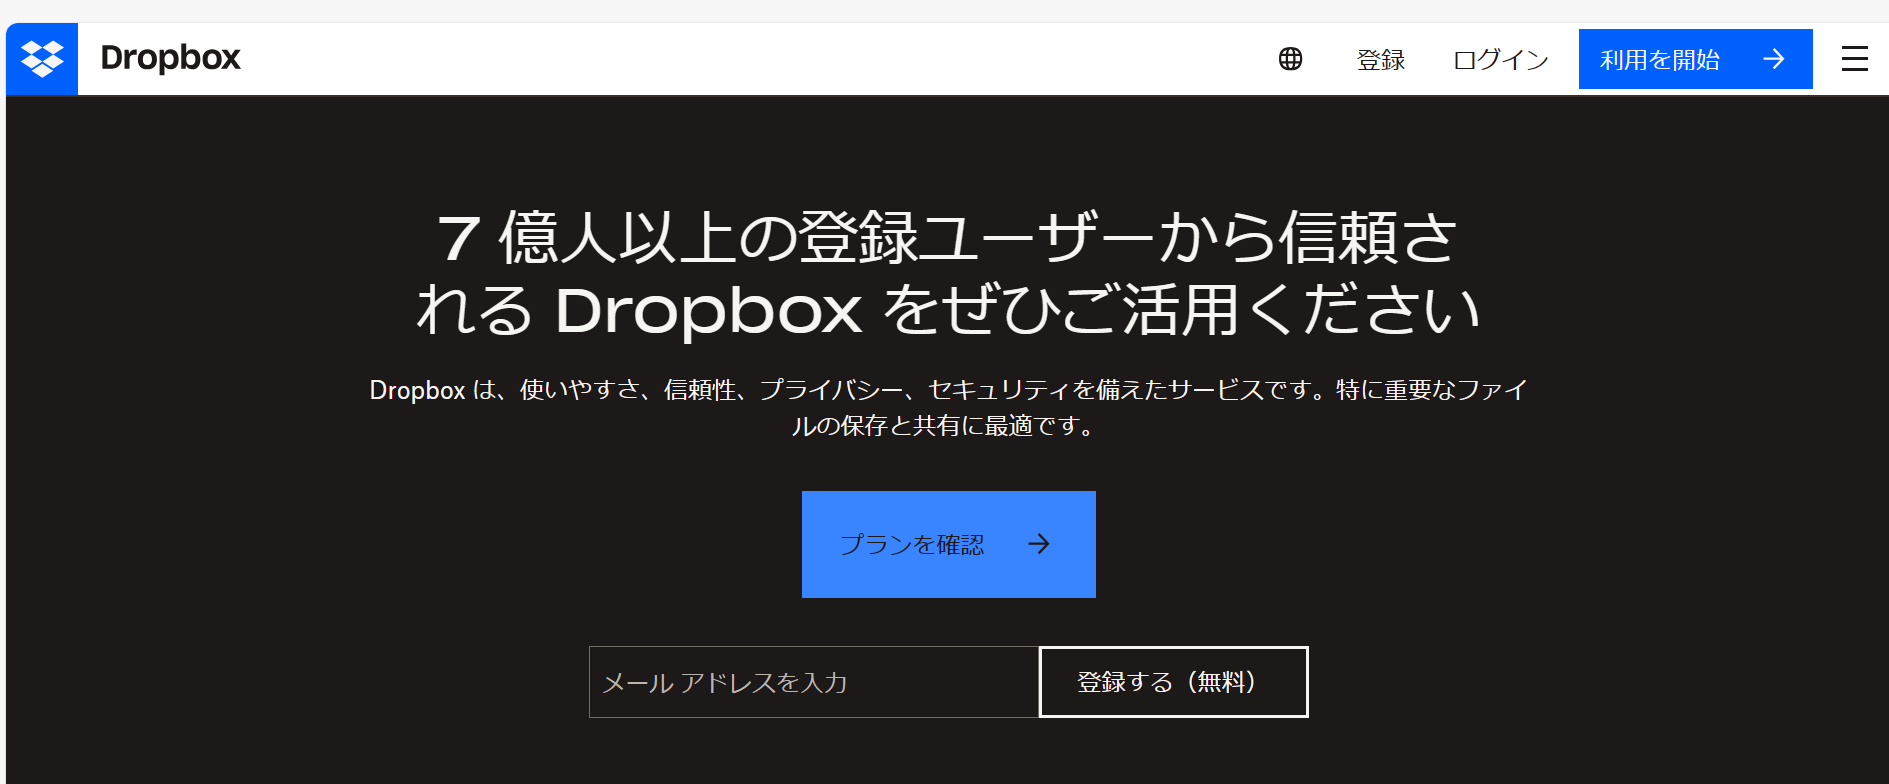 Dropboxのサイトページ画像